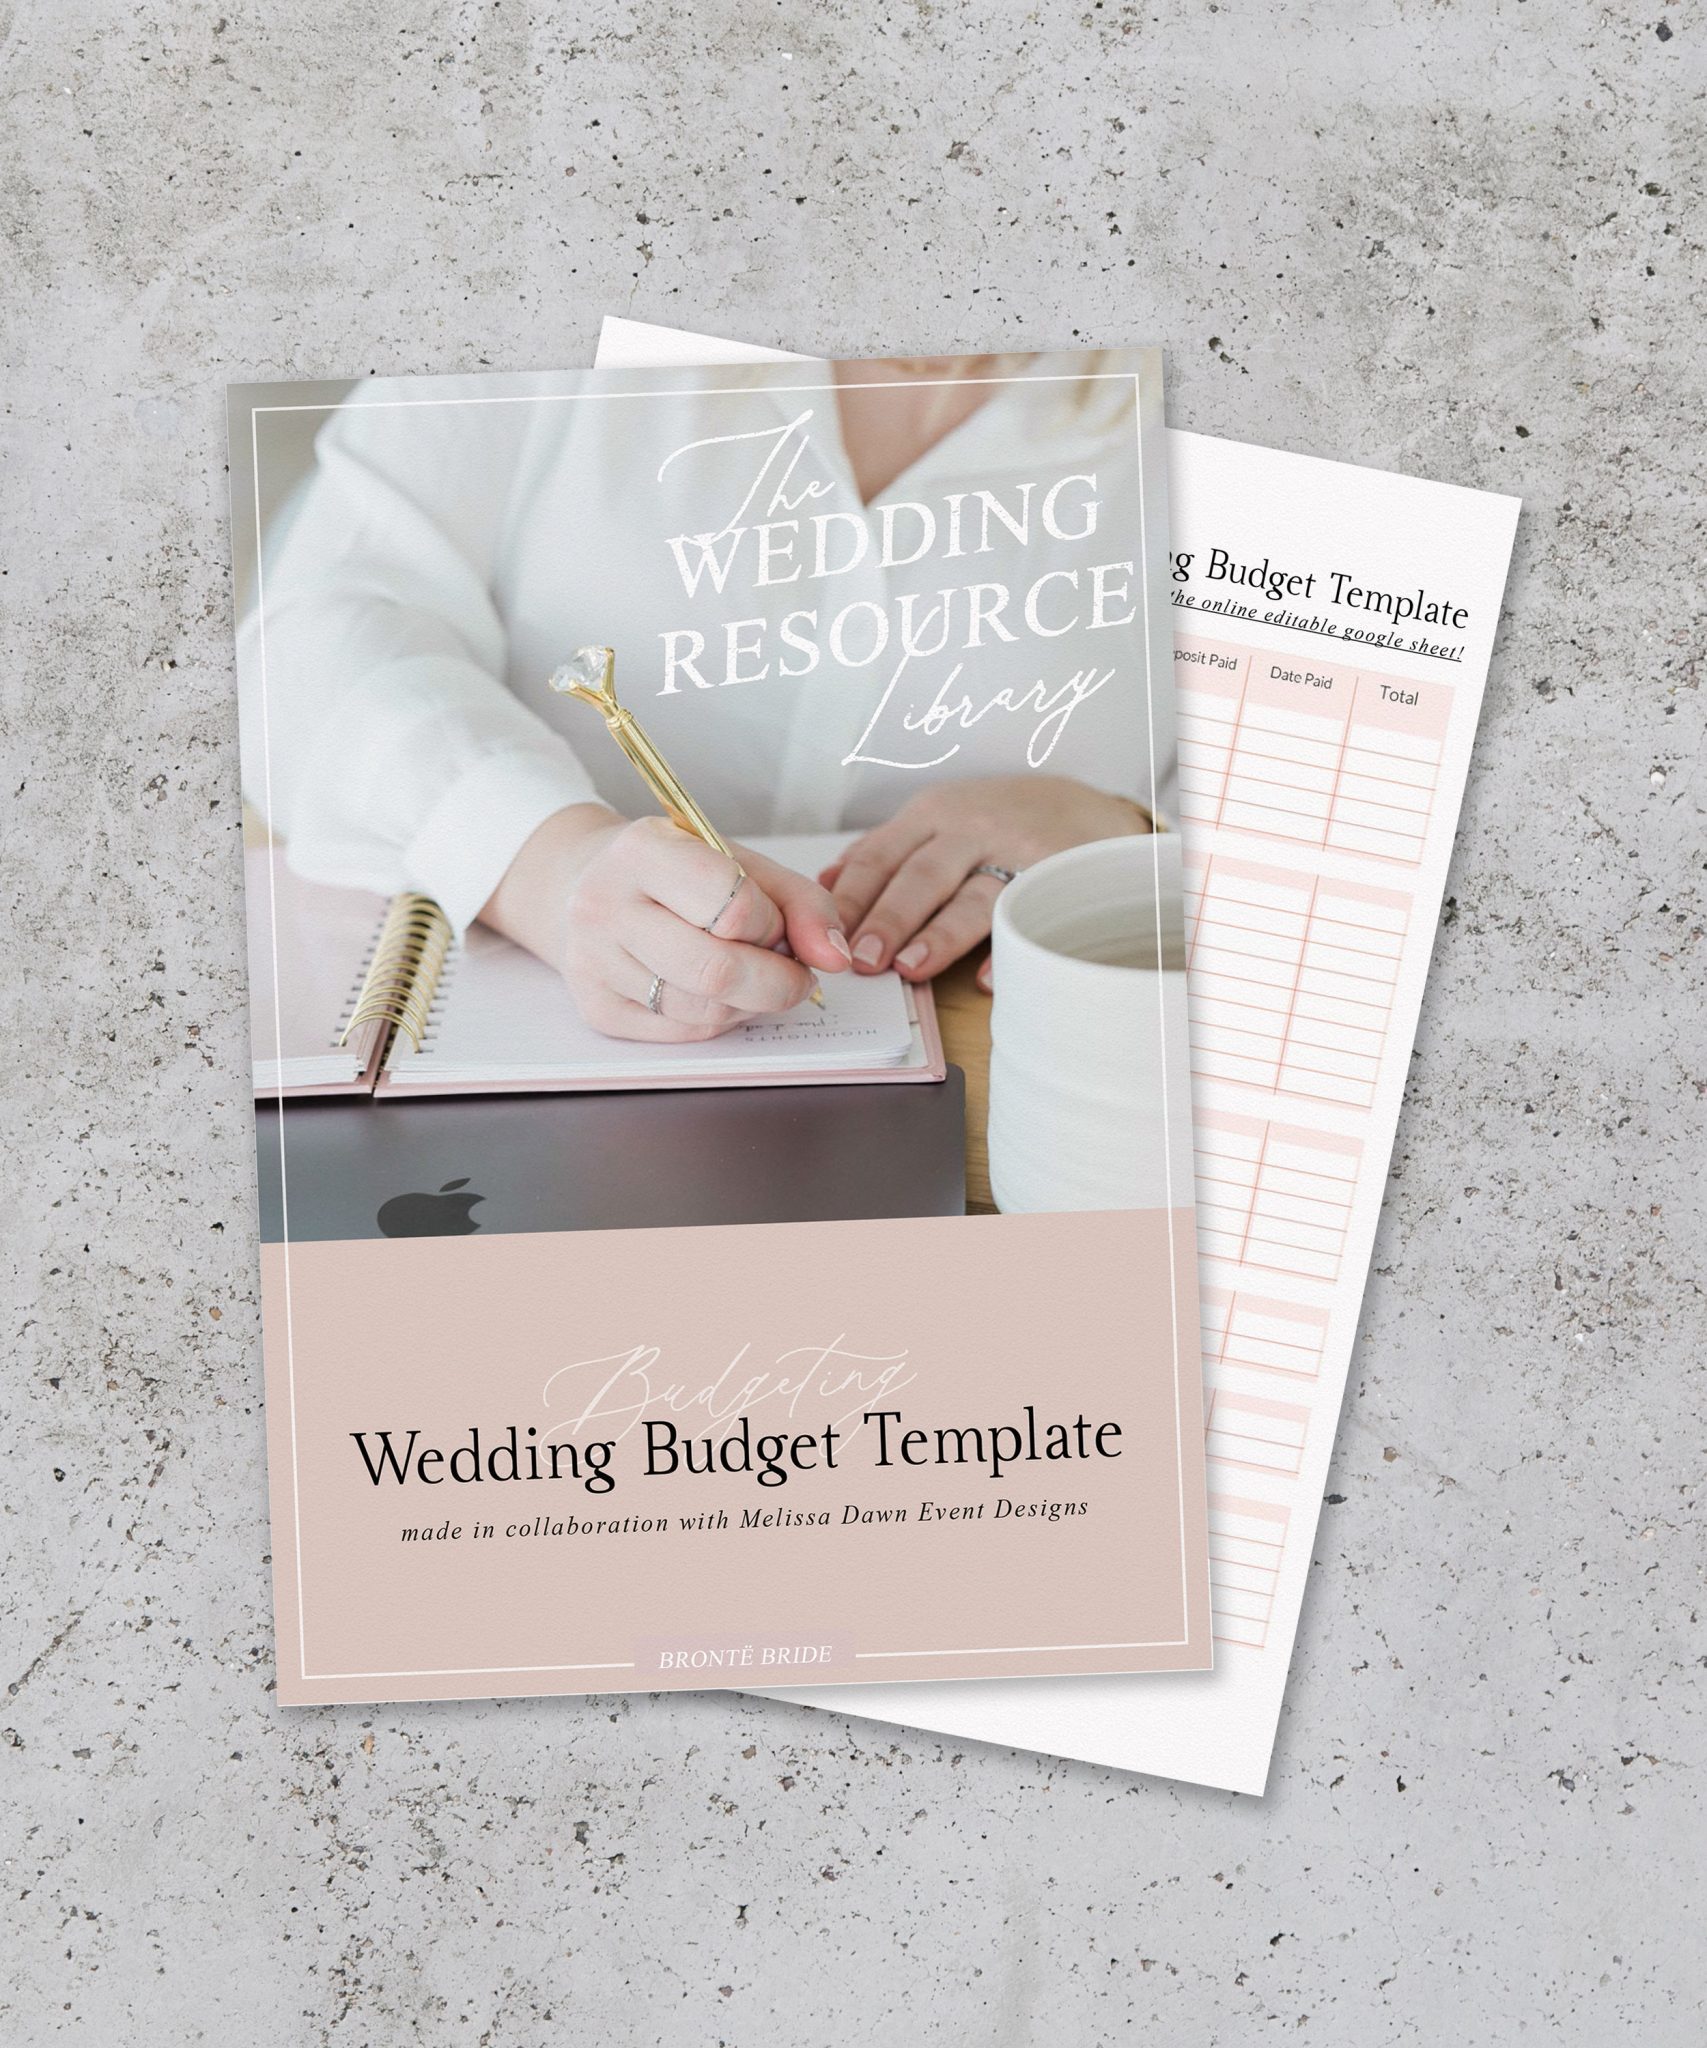 Wedding Resource Library - Free Wedding Budget Template Tool